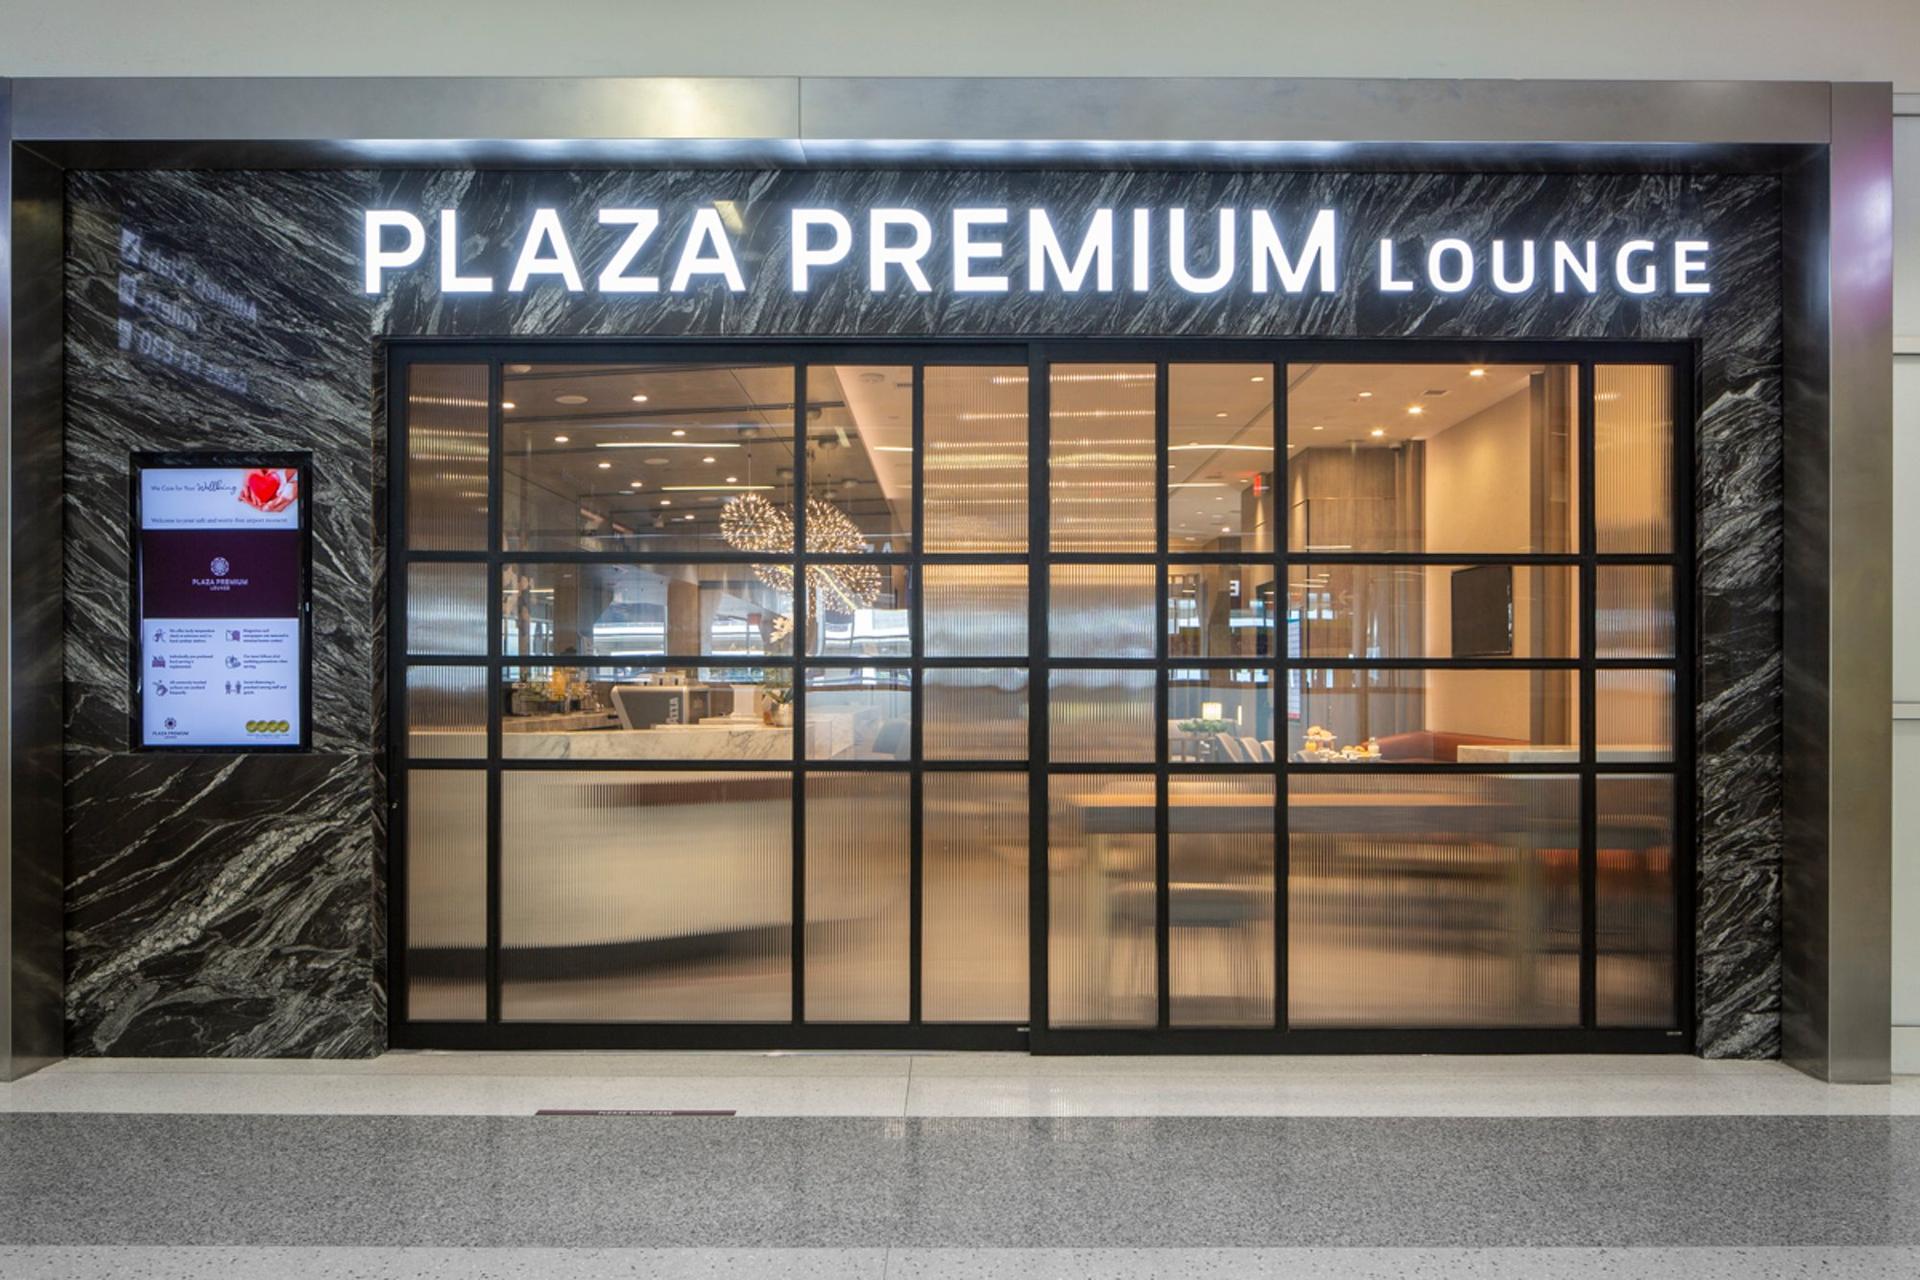 Plaza Premium Lounge image 15 of 17